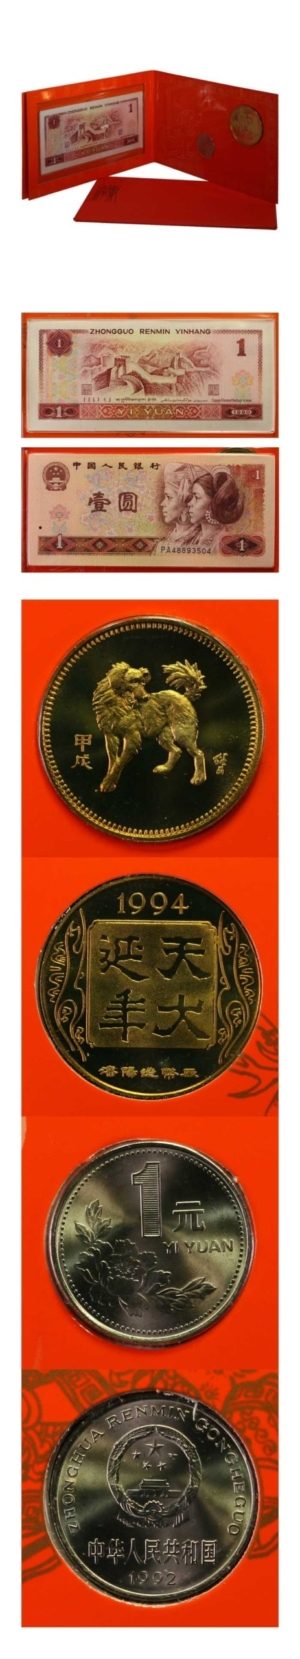 China - Zodiac - Coin & Currency Set - Year of the Dog - 1992 - 25 Sen - Presentation Folder